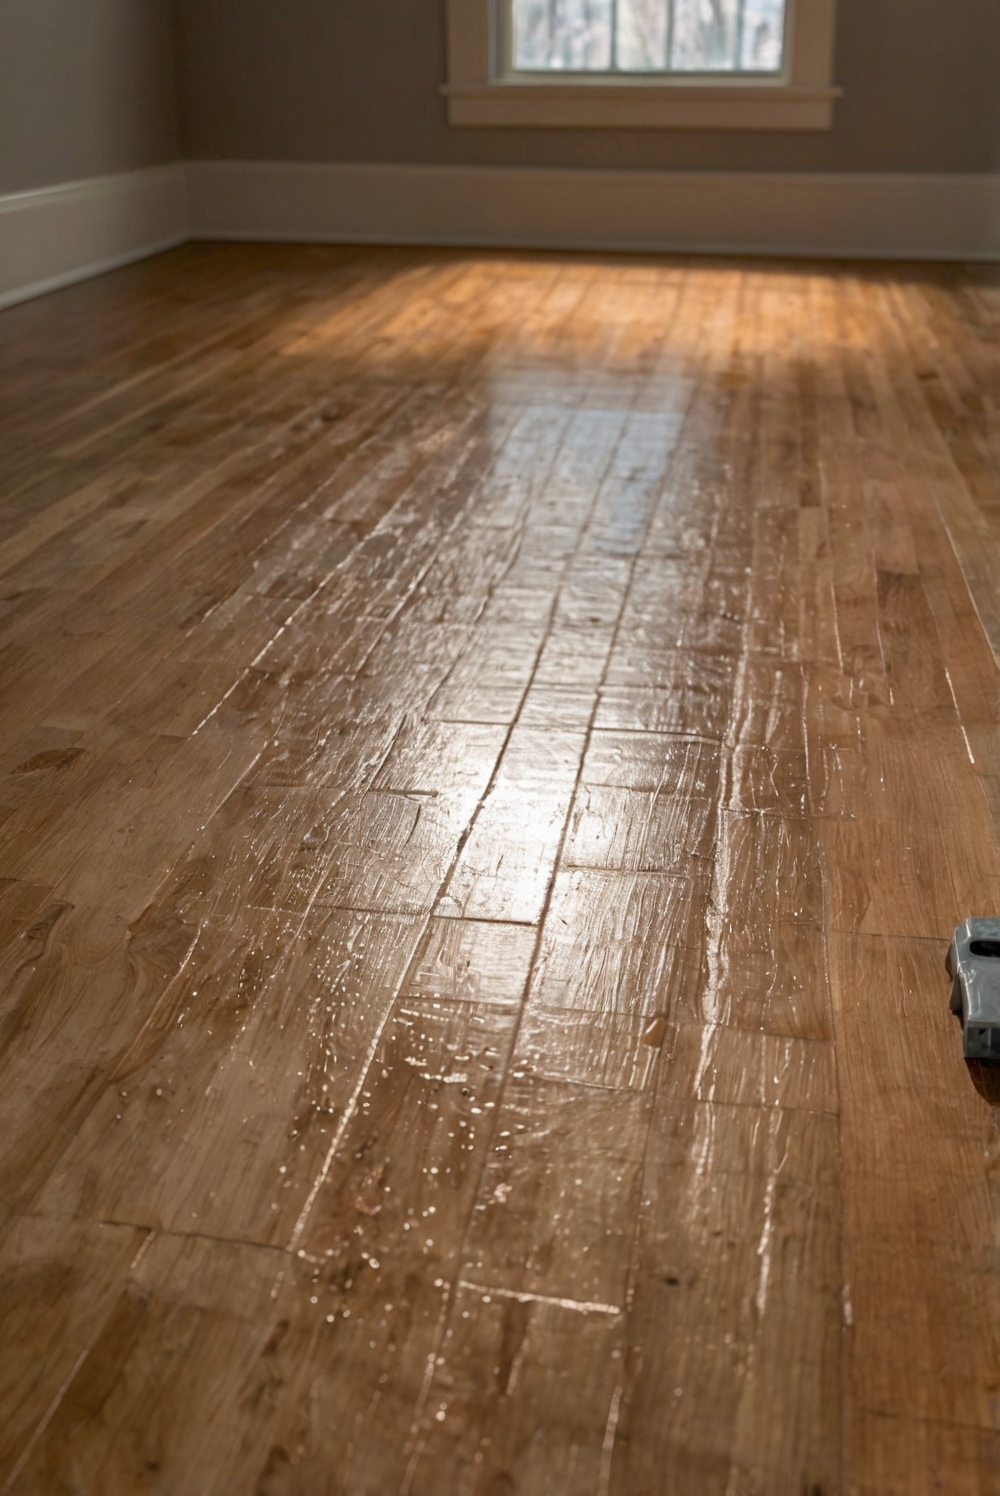 Refinishing wood floors, hardwood floor refinishing, floor refinishing services, floor renovation, wood floor restoration, floor remodeling, floor makeover